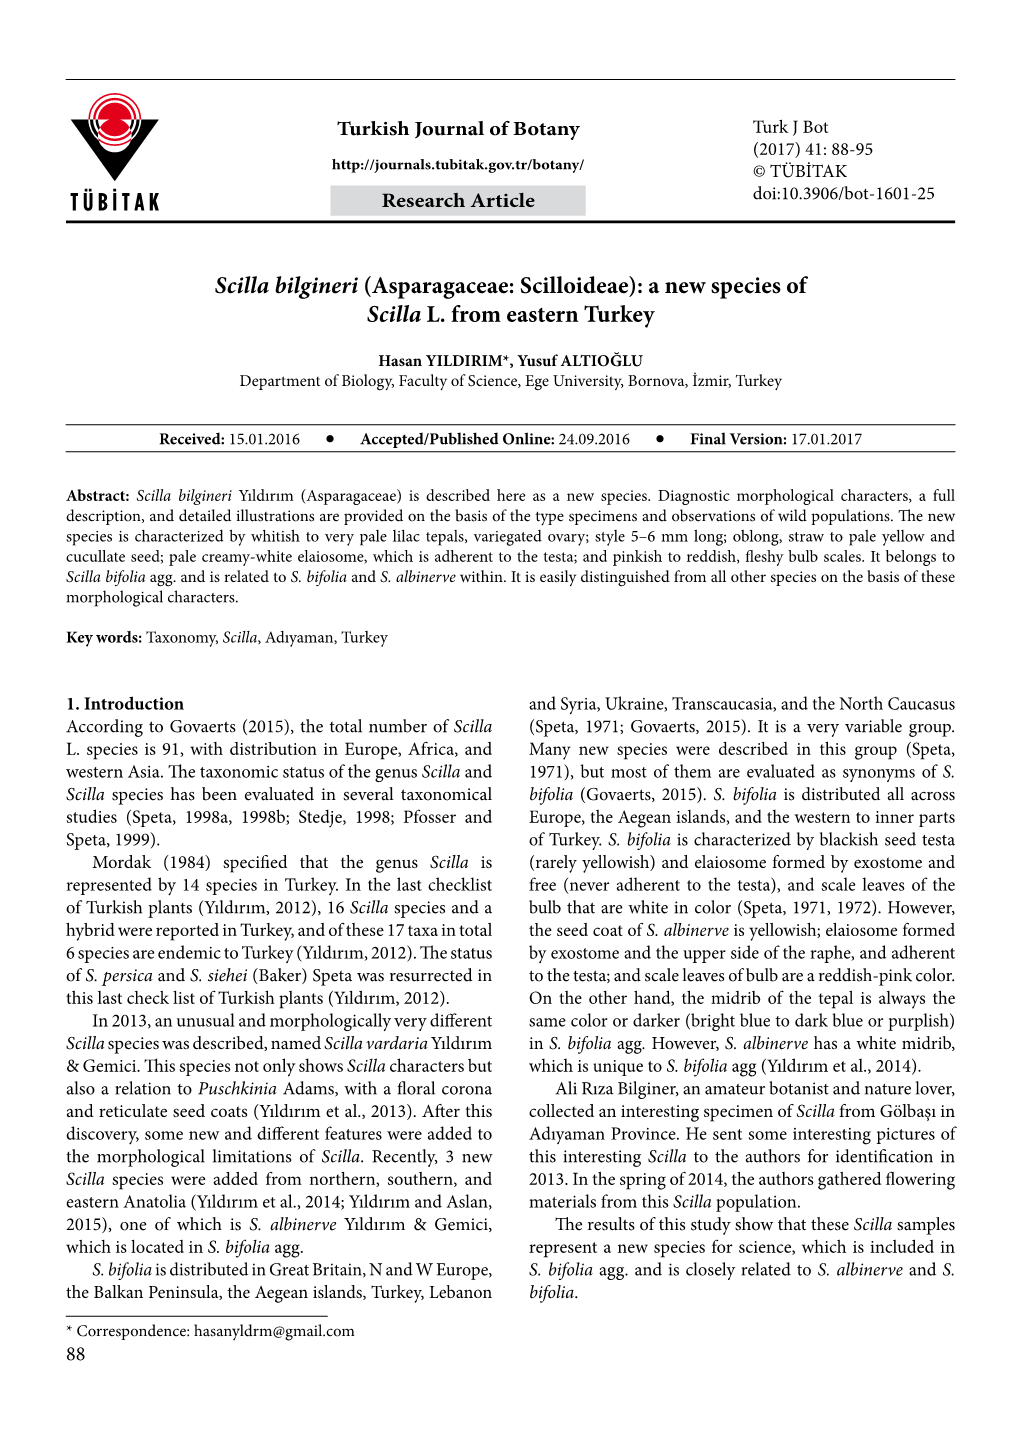 Scilla Bilgineri (Asparagaceae: Scilloideae): a New Species of Scilla L